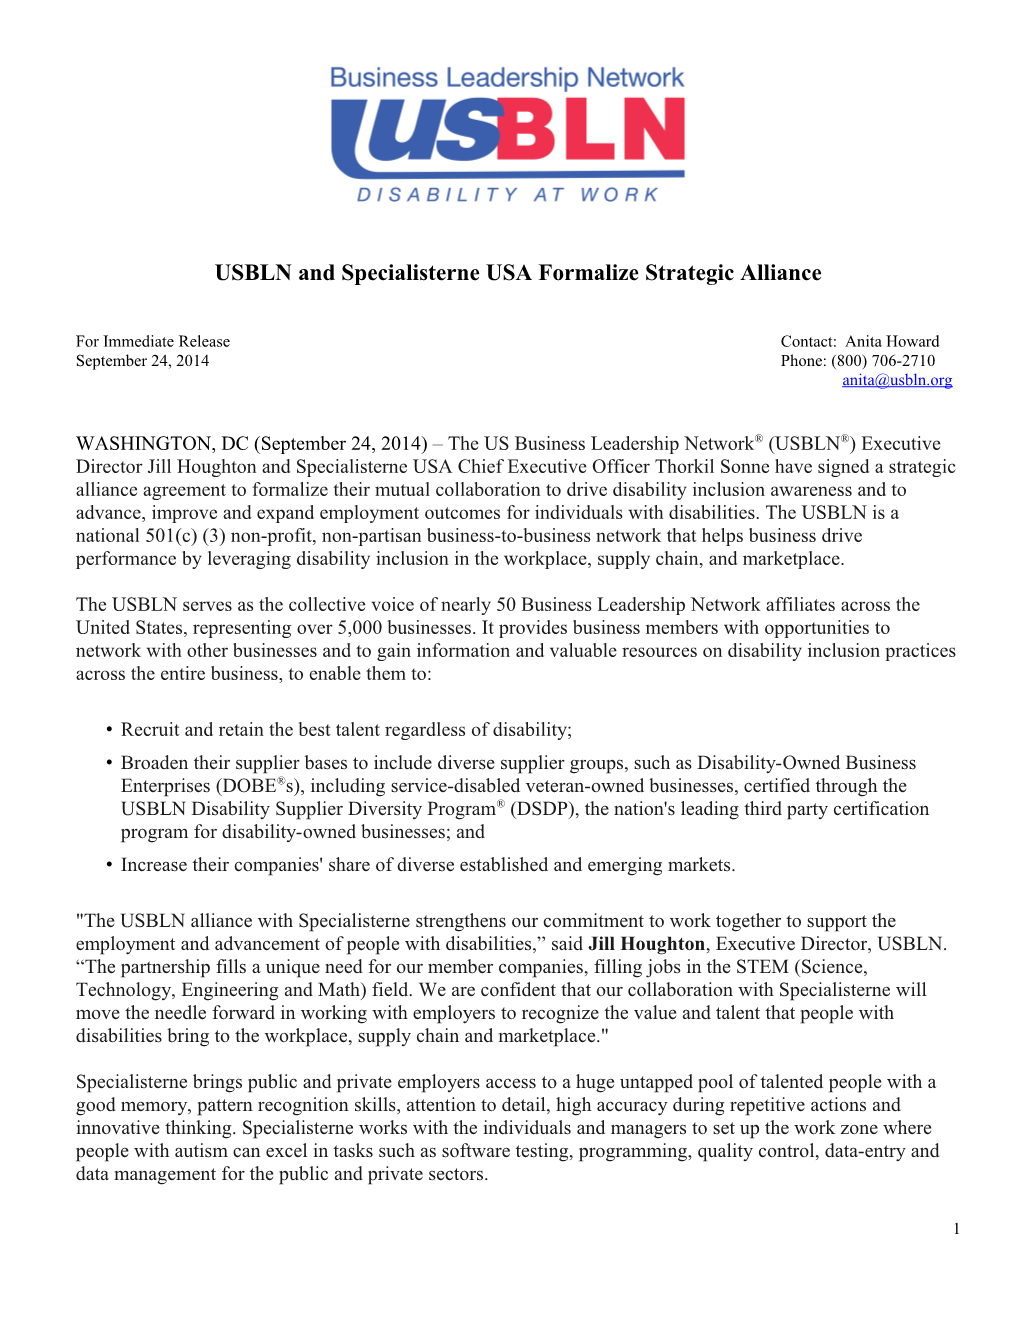 USBLN and Specialisterne USA Formalize Strategic Alliance